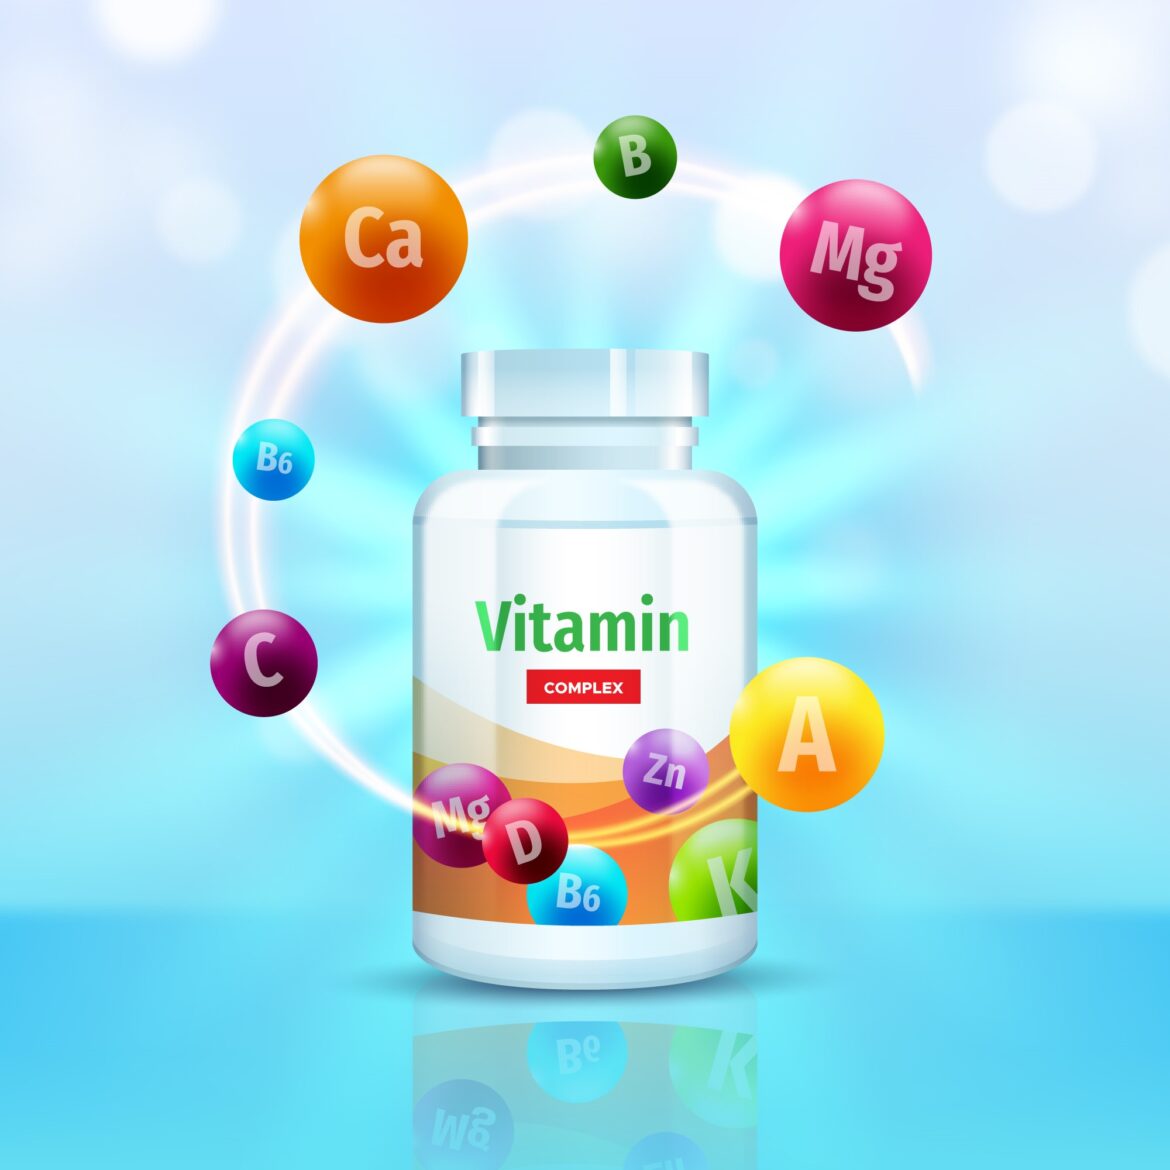 Vitamin E absorption in kids